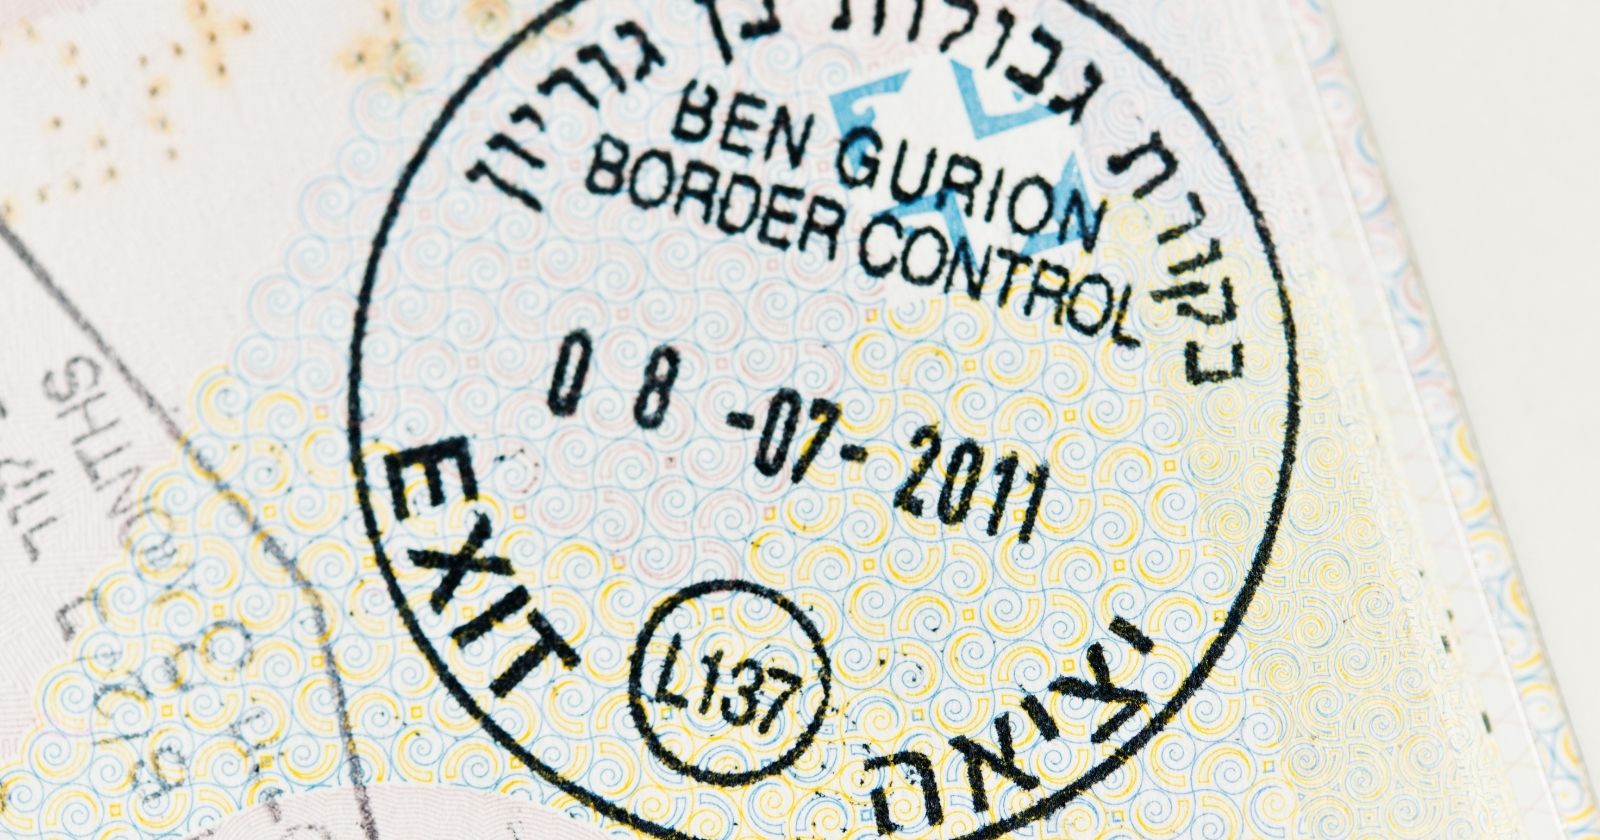 stamp of Israël ben gurion tel aviv airport visa